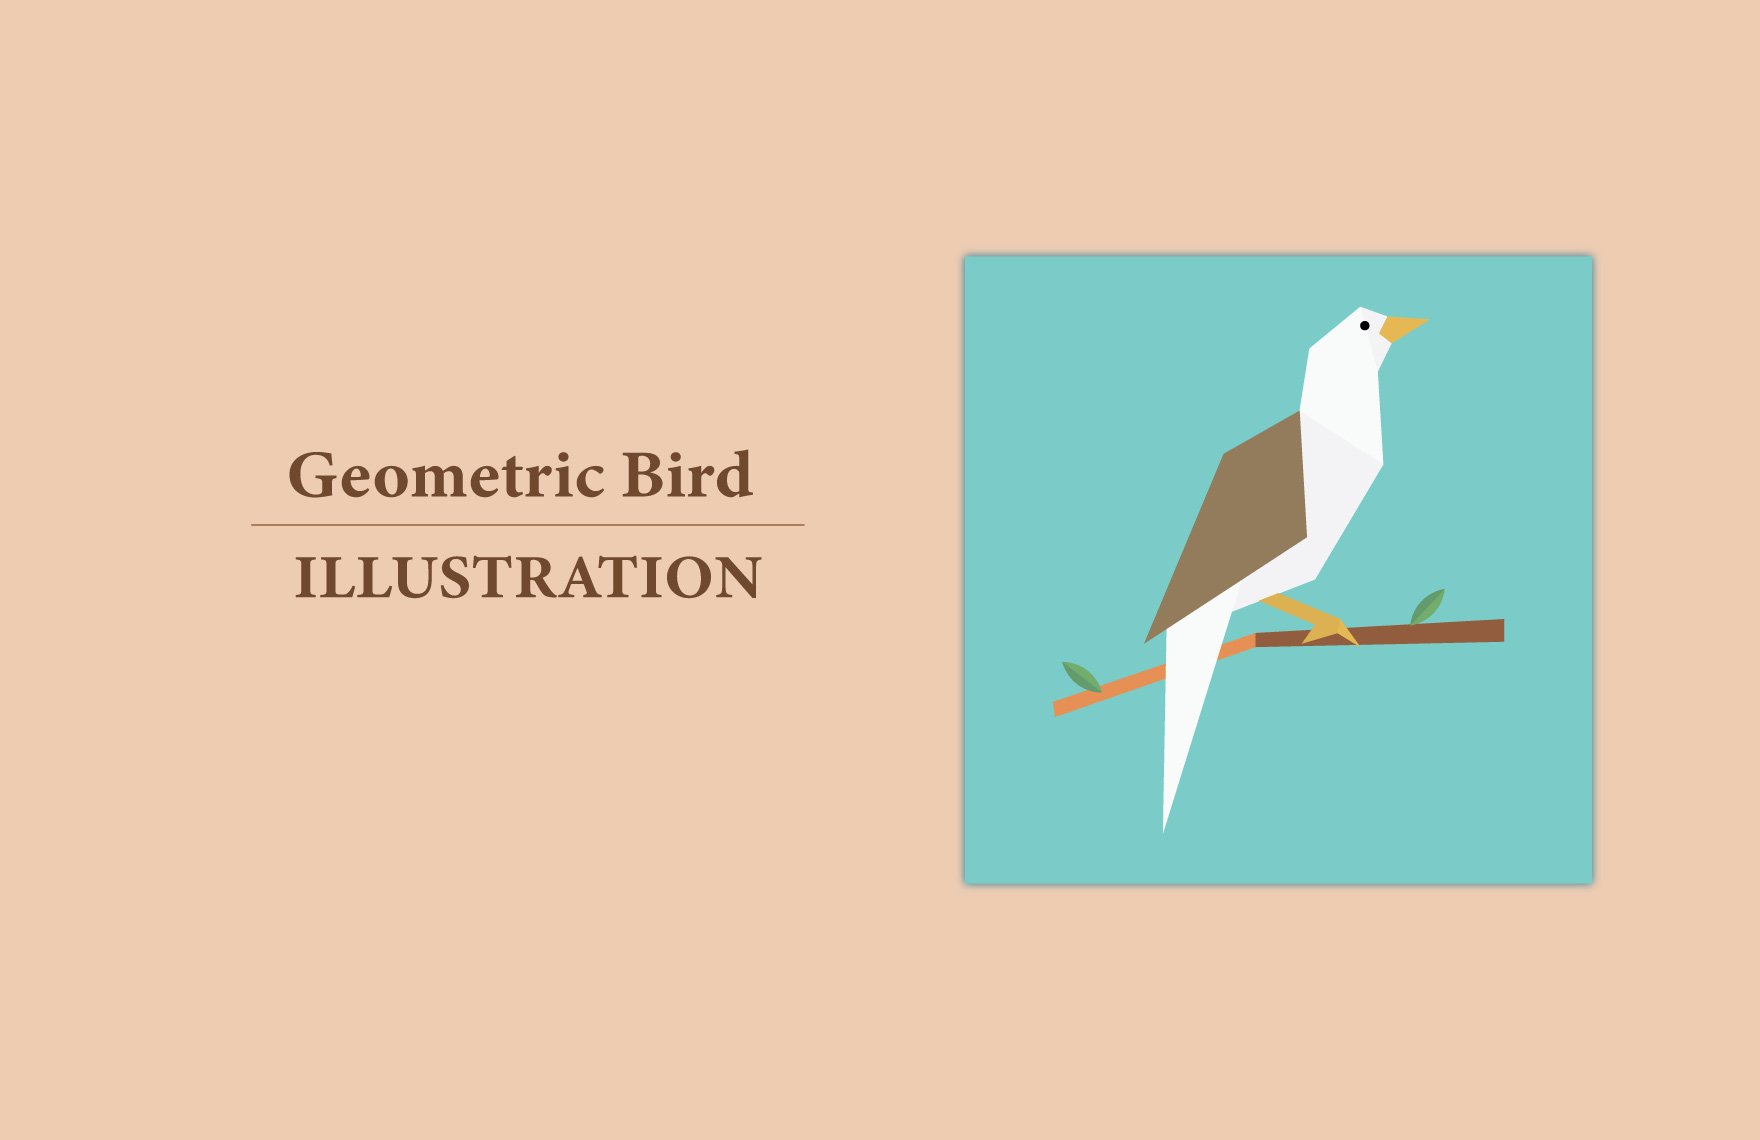 Free Geometric Bird Illustration in Illustrator, PSD, JPG, PNG